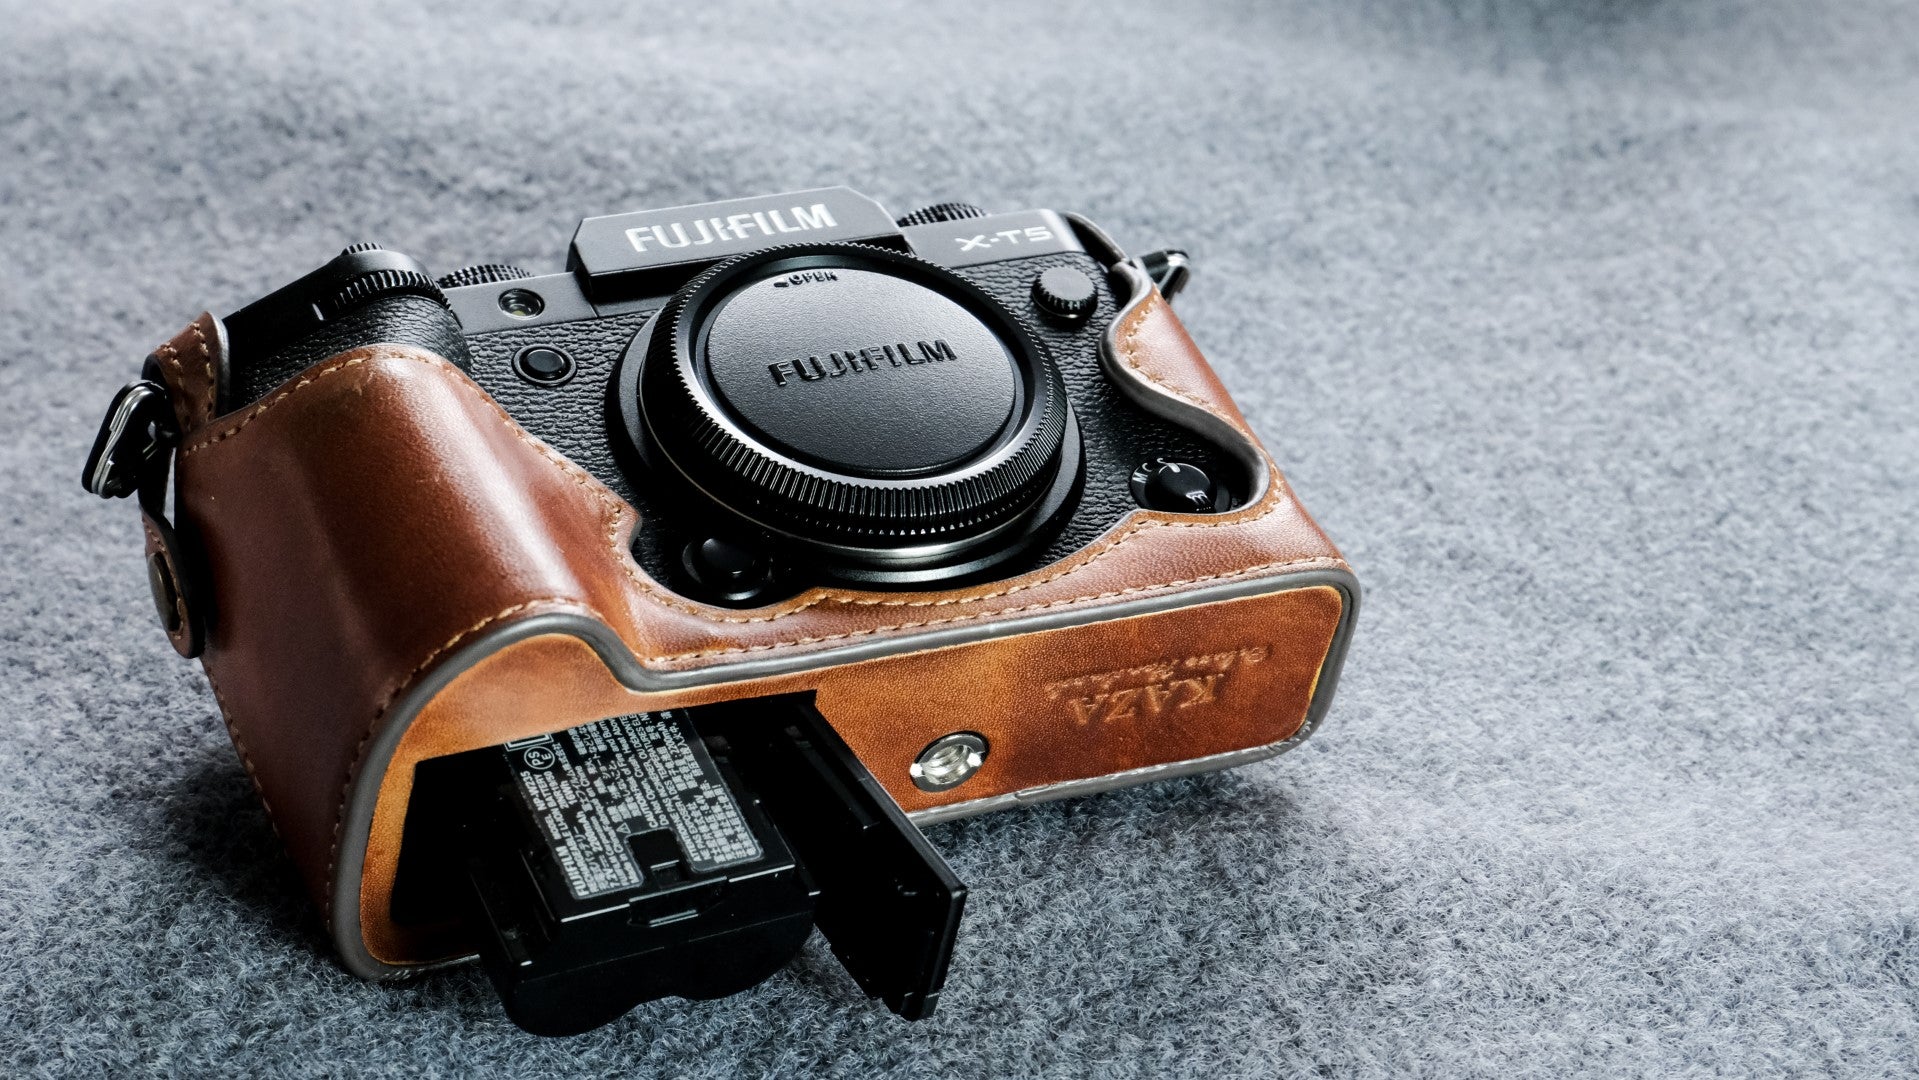 Rieibi Fuji XT5 Case - PU Leather Half Case for Fujifilm X-T5 Digital  Camera - Body Protective Grip Case for Fuji XT5 X-T5, Coffee, Beauty Case